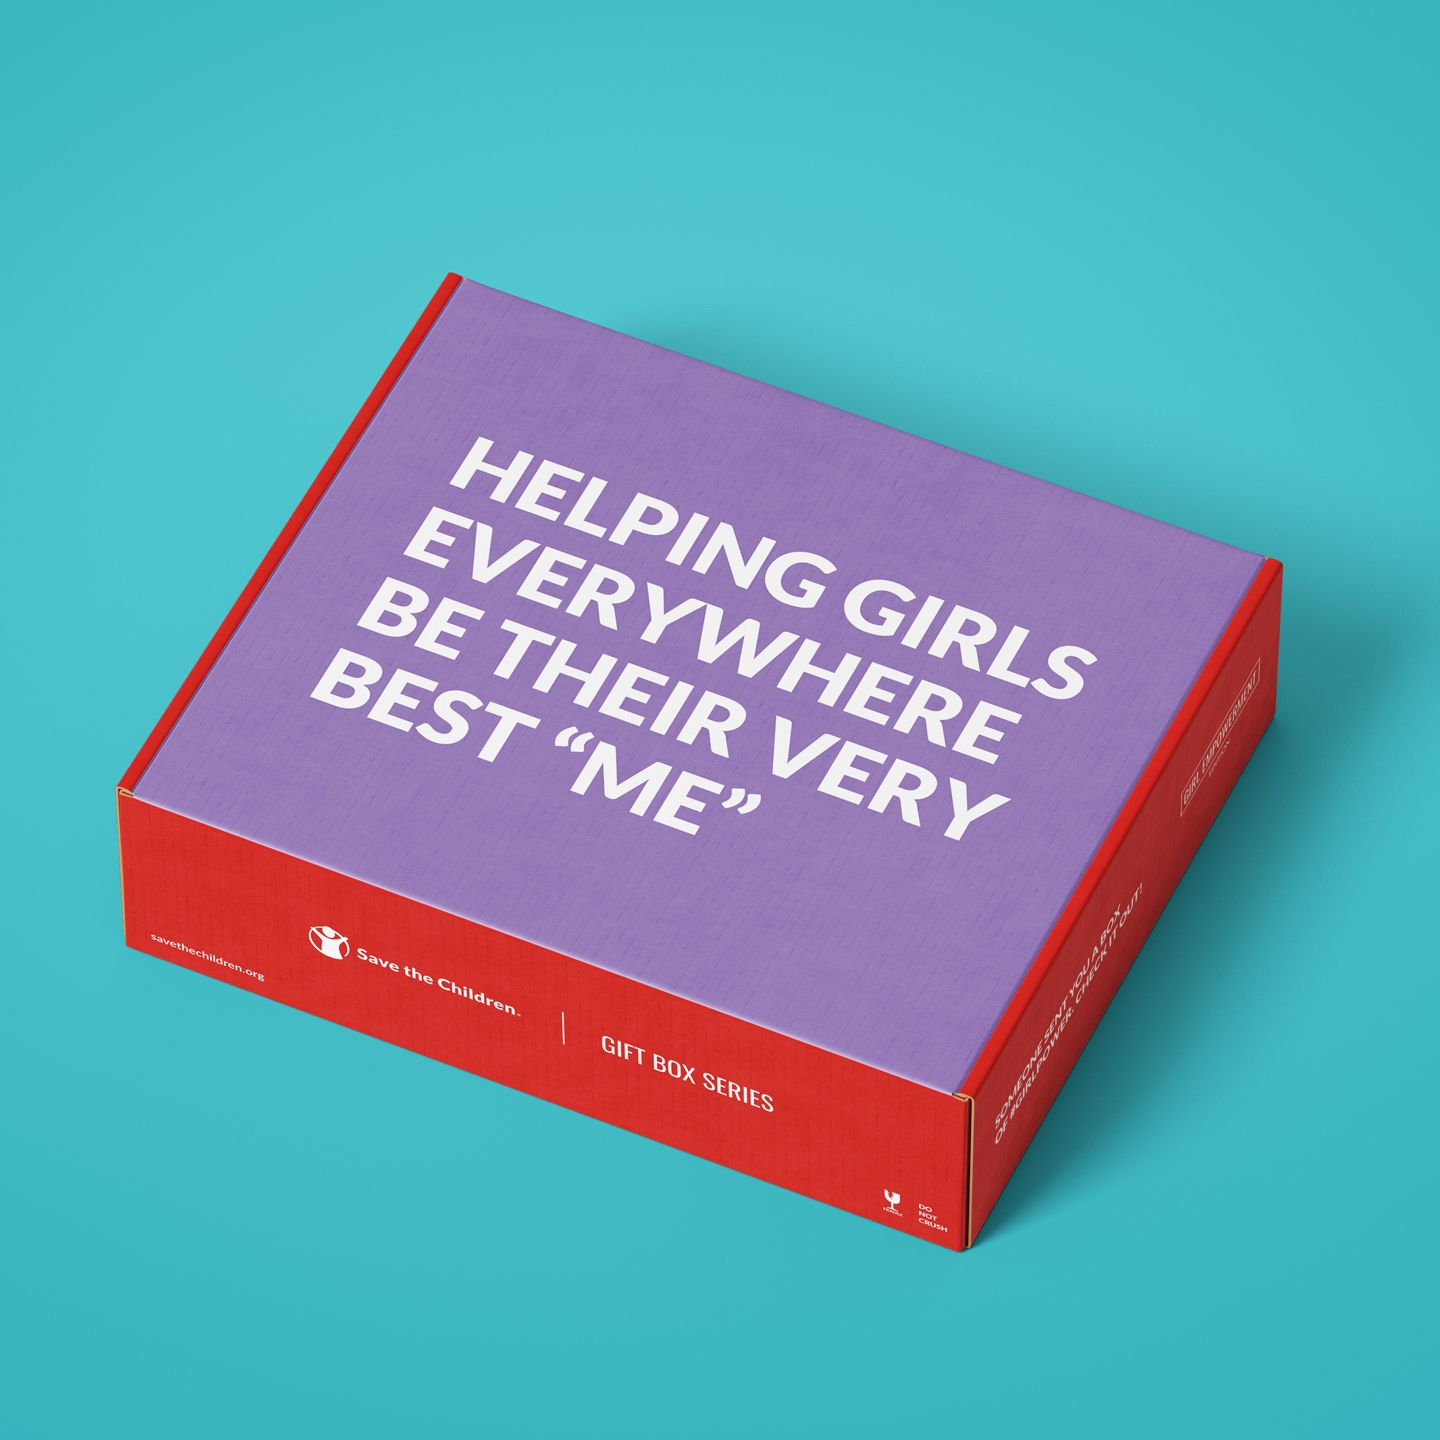 A Girls' Empowerment Save the Children Gift Box